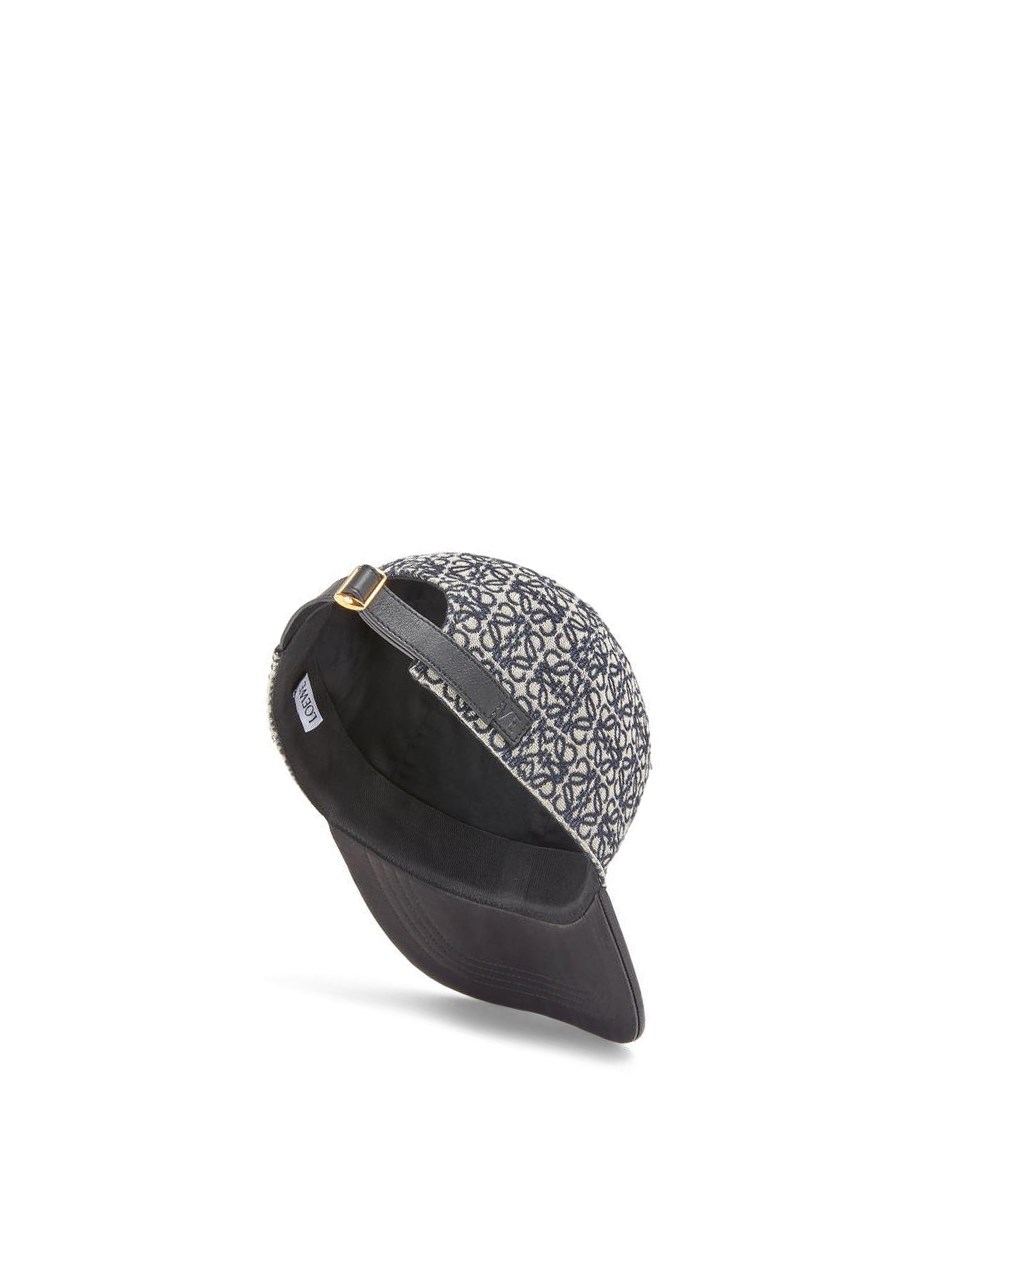 Loewe Anagram cap in jacquard and calfskin Navy / Black | JM0367598